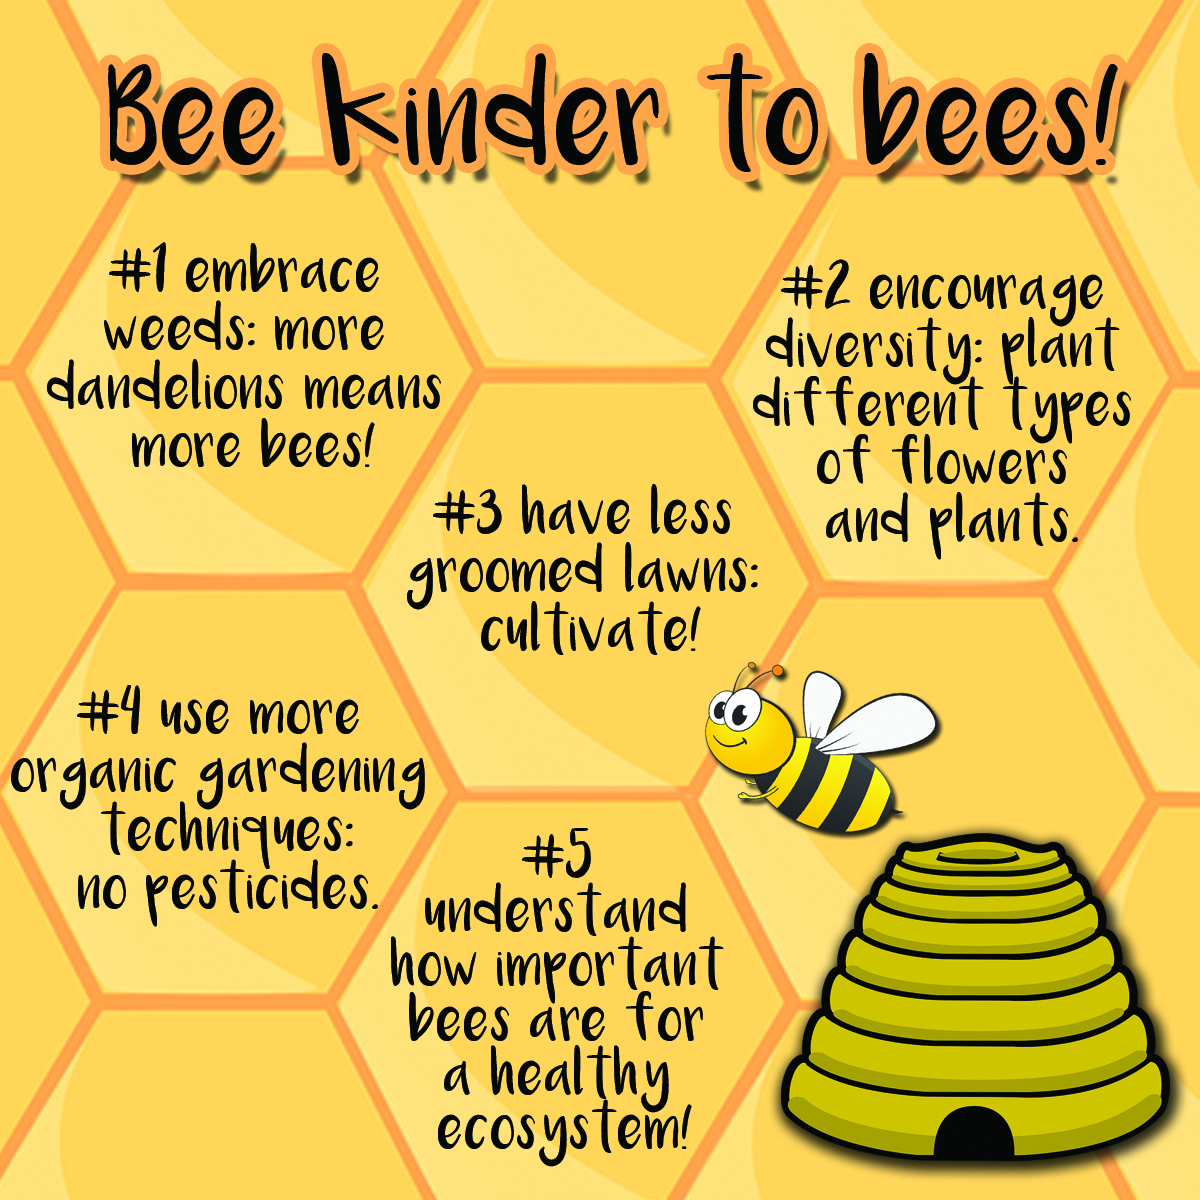 U coming перевод. What are Bees?. Презентация how do Bees make Honey.. Bees describe. Bees правильно?.